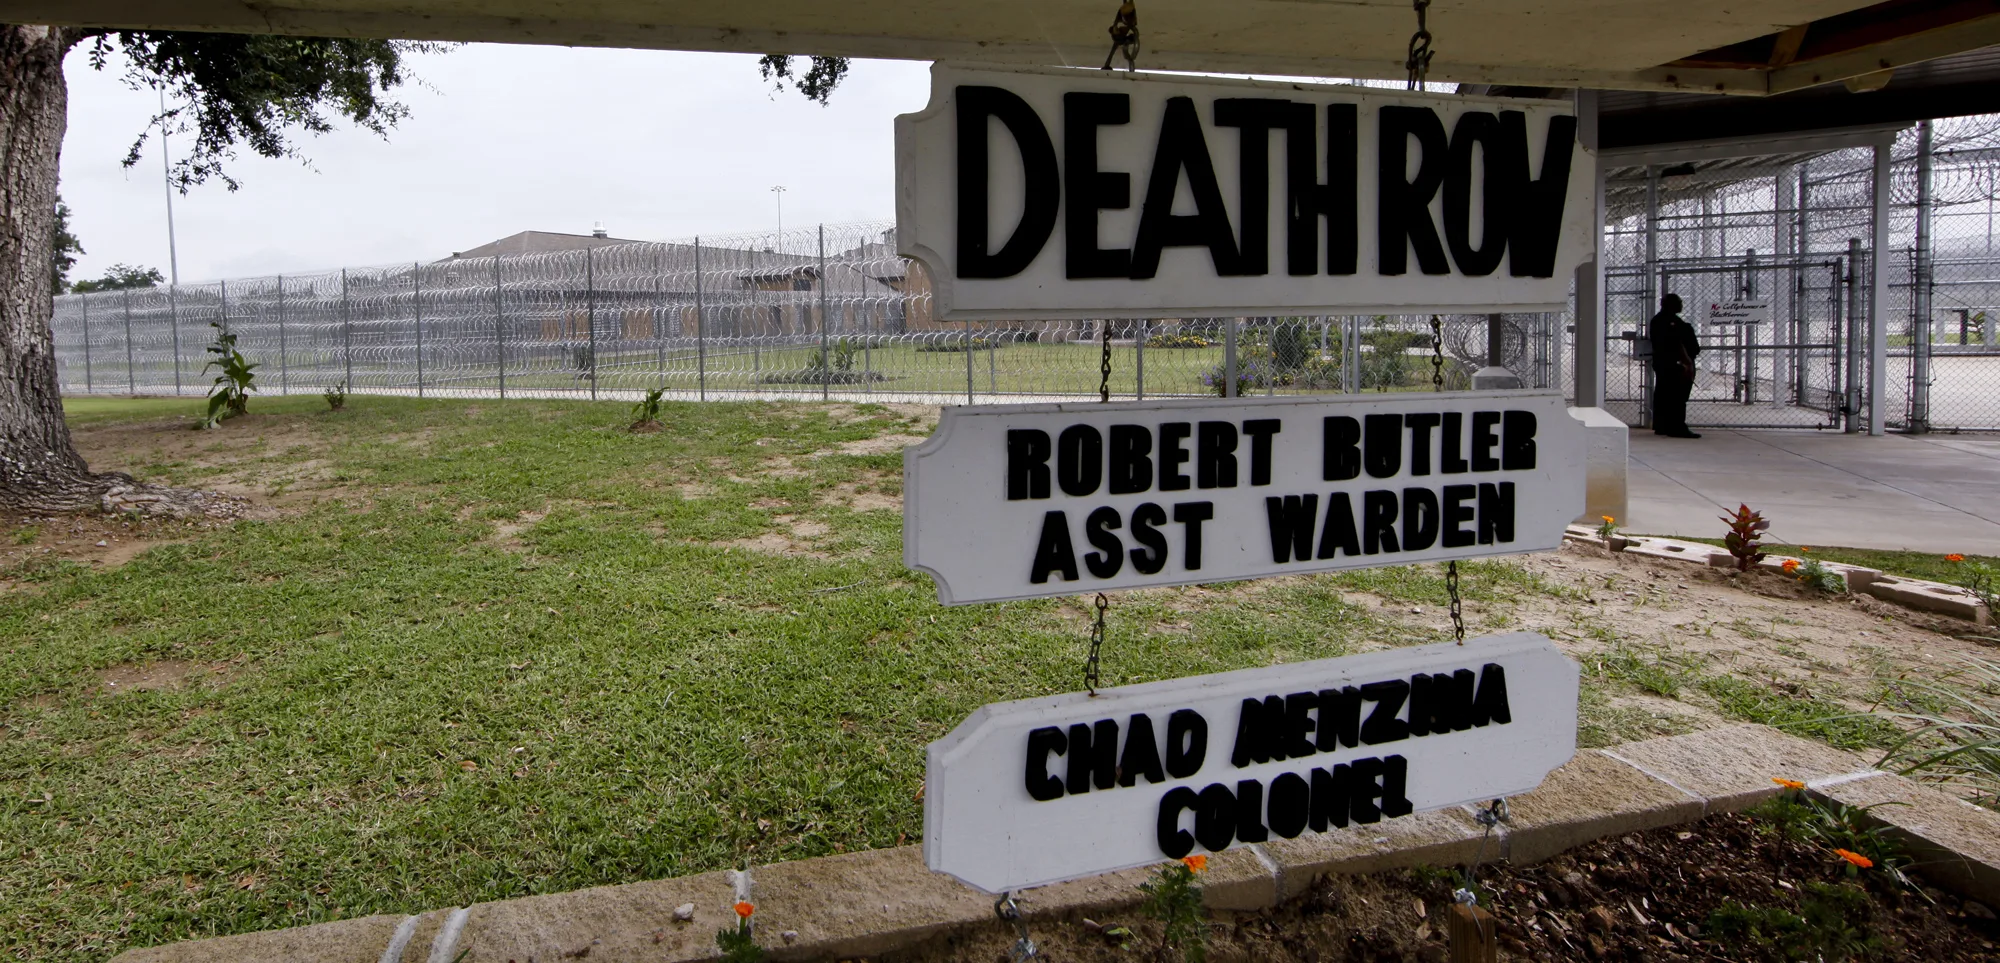 Death Row building at the Louisiana State Penitentiary Friday, Sept. 18, 2009 in Angola, Louisiana. ( AP Photo/Judi Bottoni )